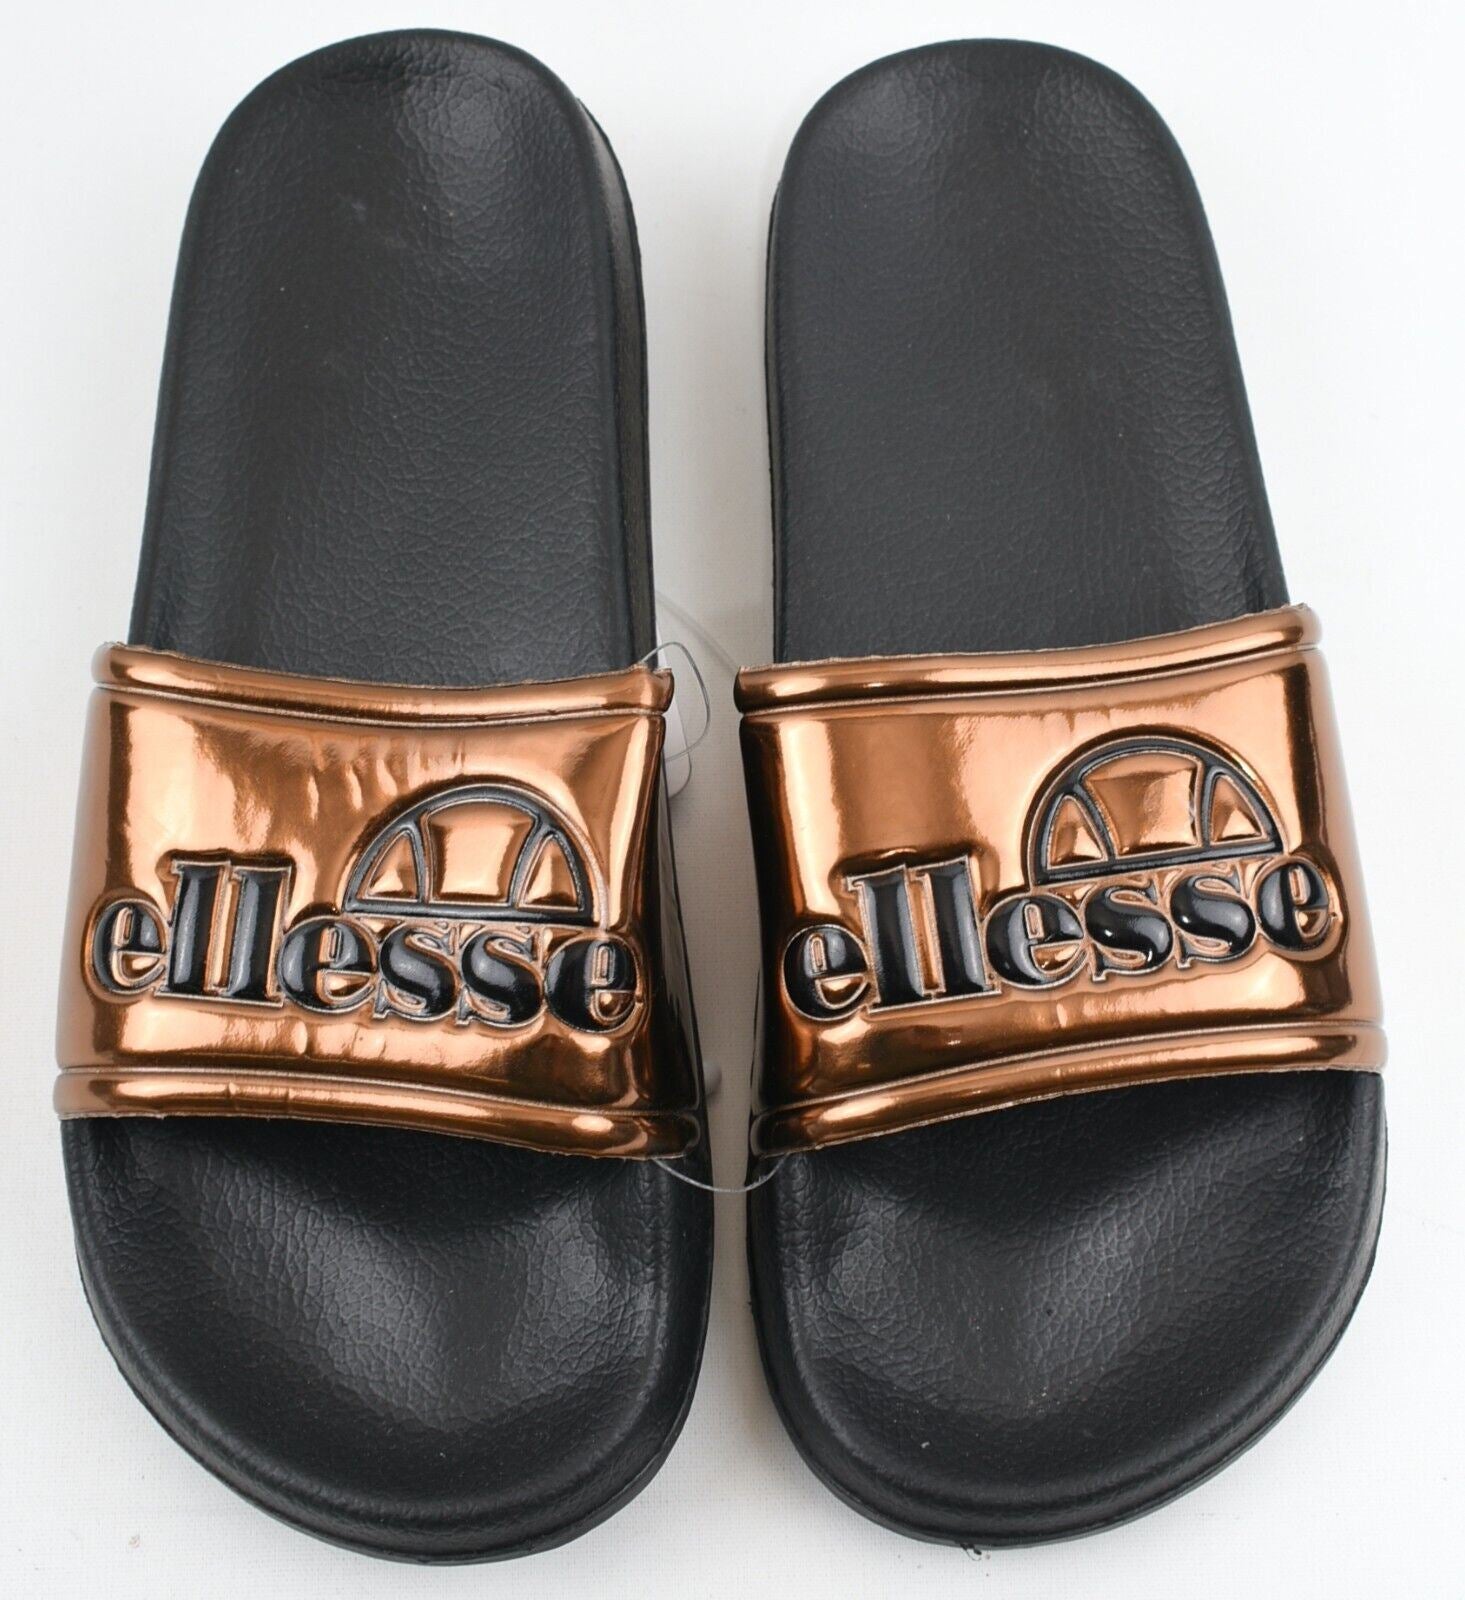 ELLESSE - GISELLE Womens Logo Sliders, Sandals, Bronze/Black, size UK 5 / EU 38